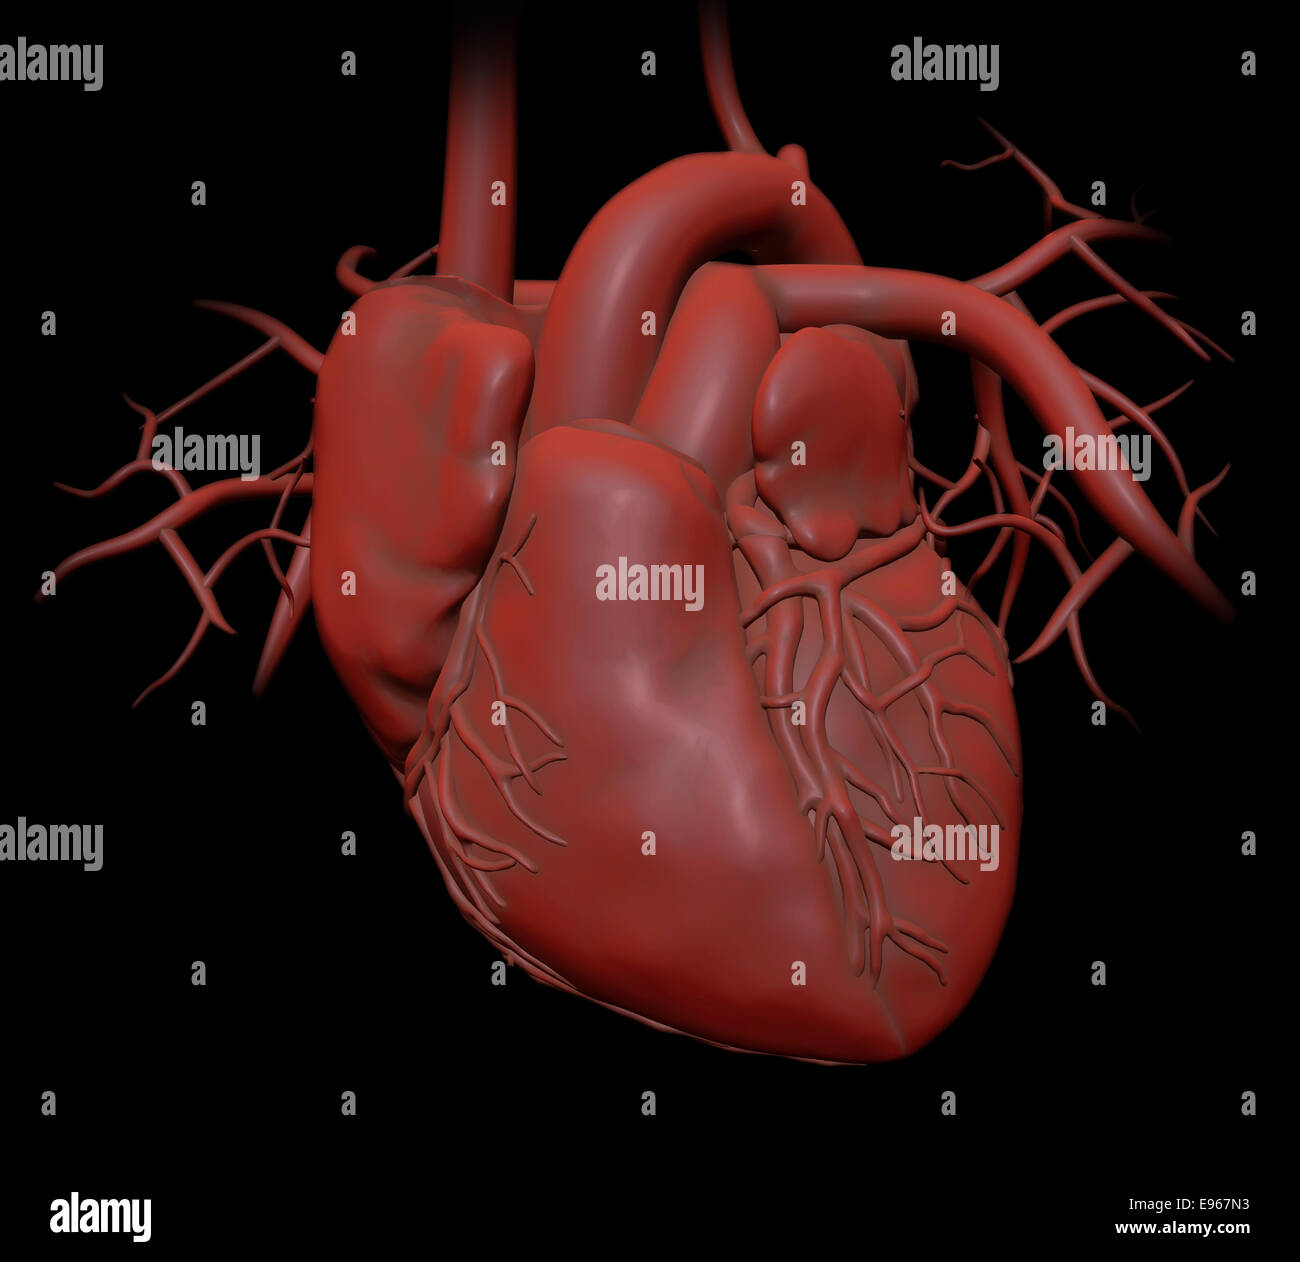 Human heart - cardiology health care illustration Stock Photo